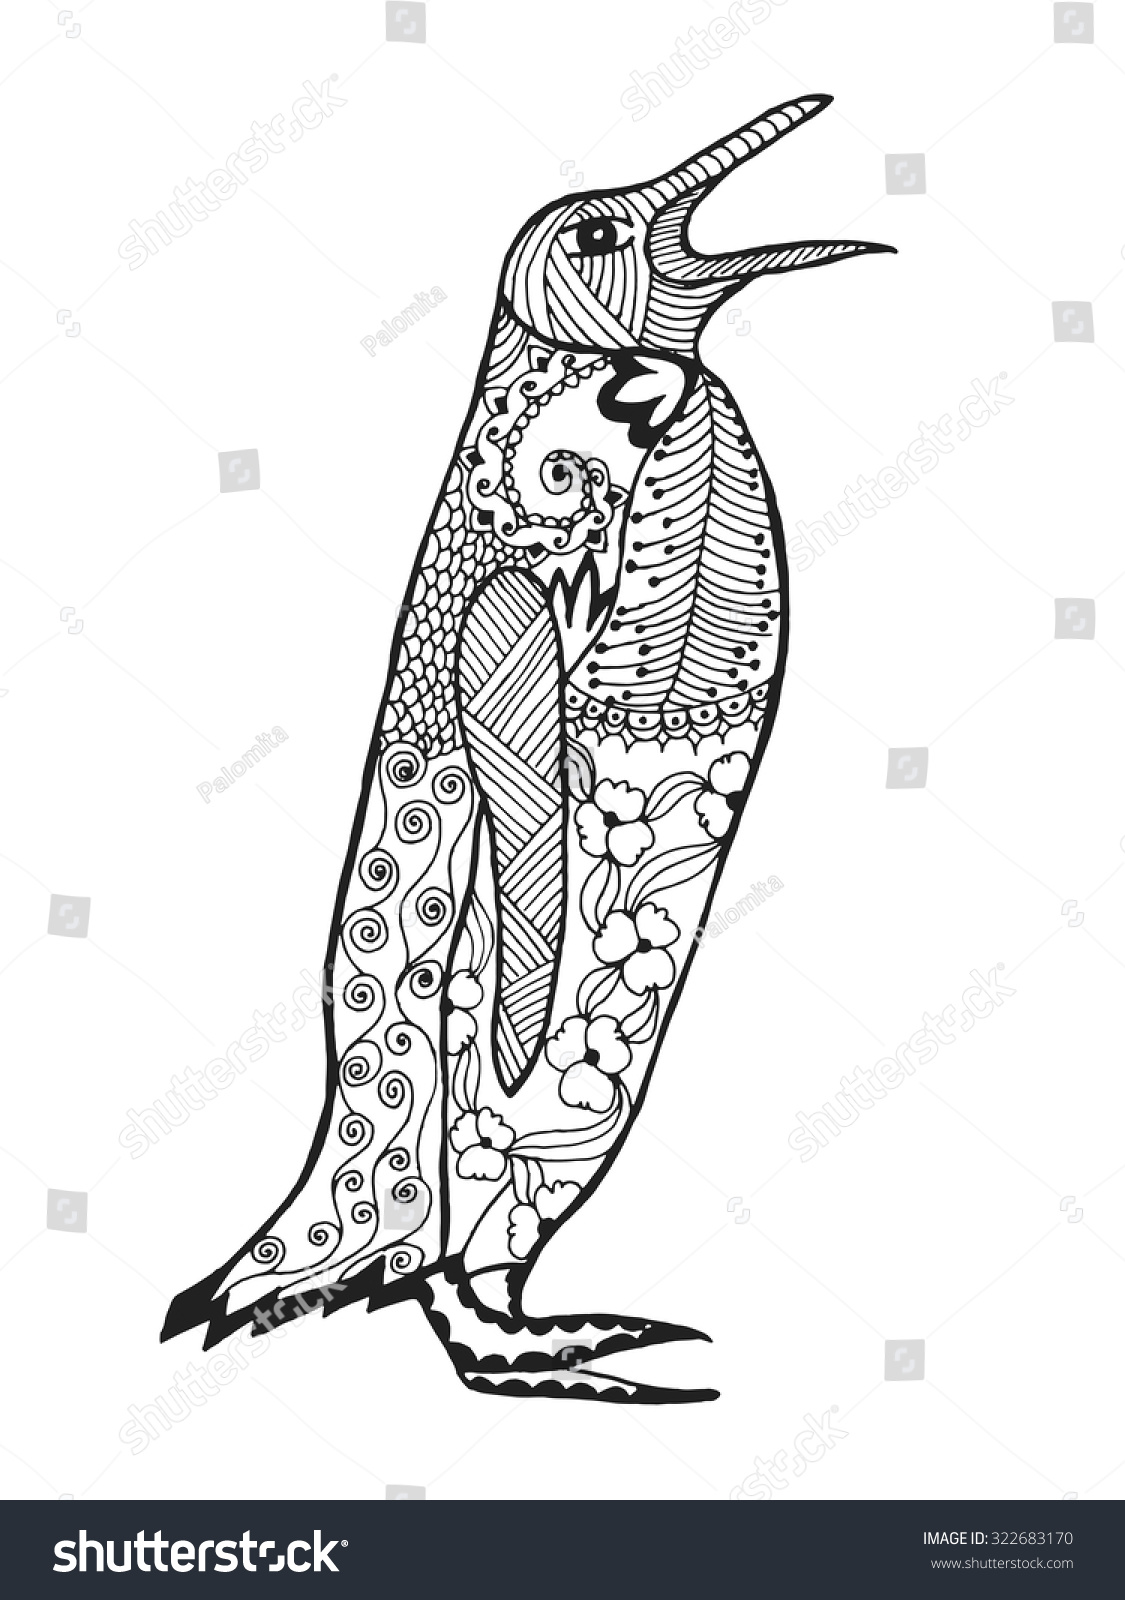 Image result for adult coloring penguins